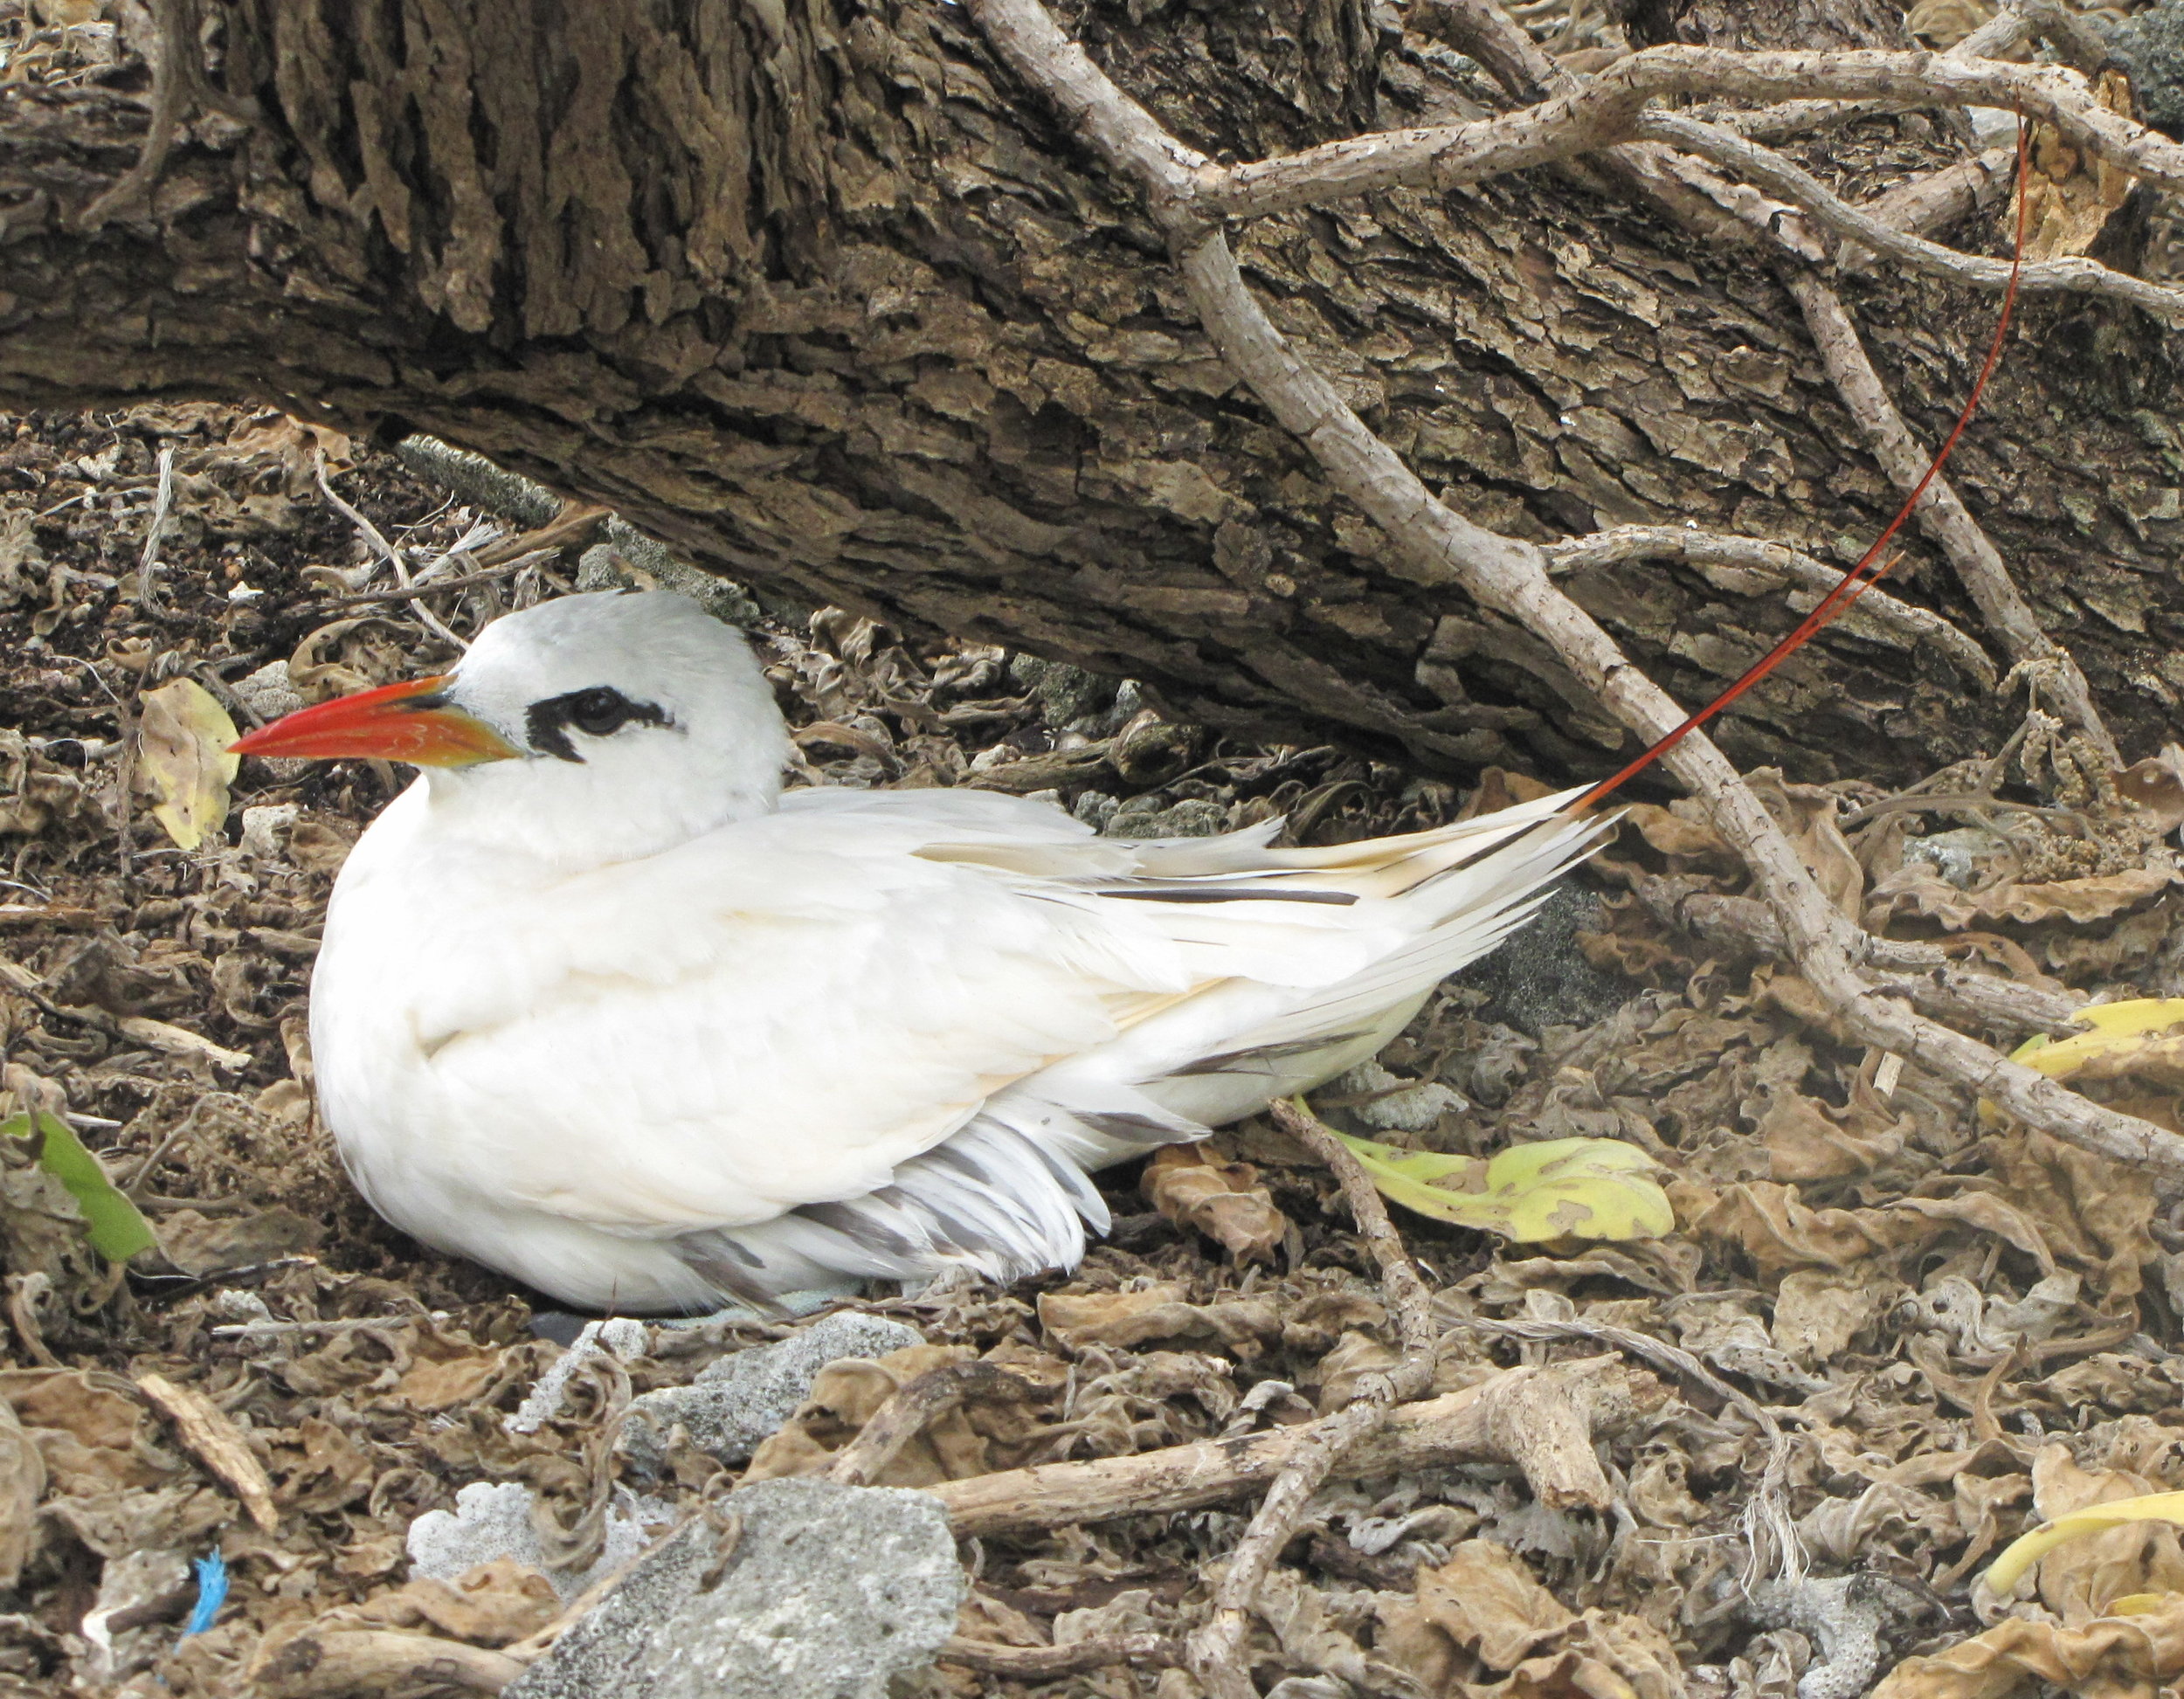 Red-tailed tropic bird nesting